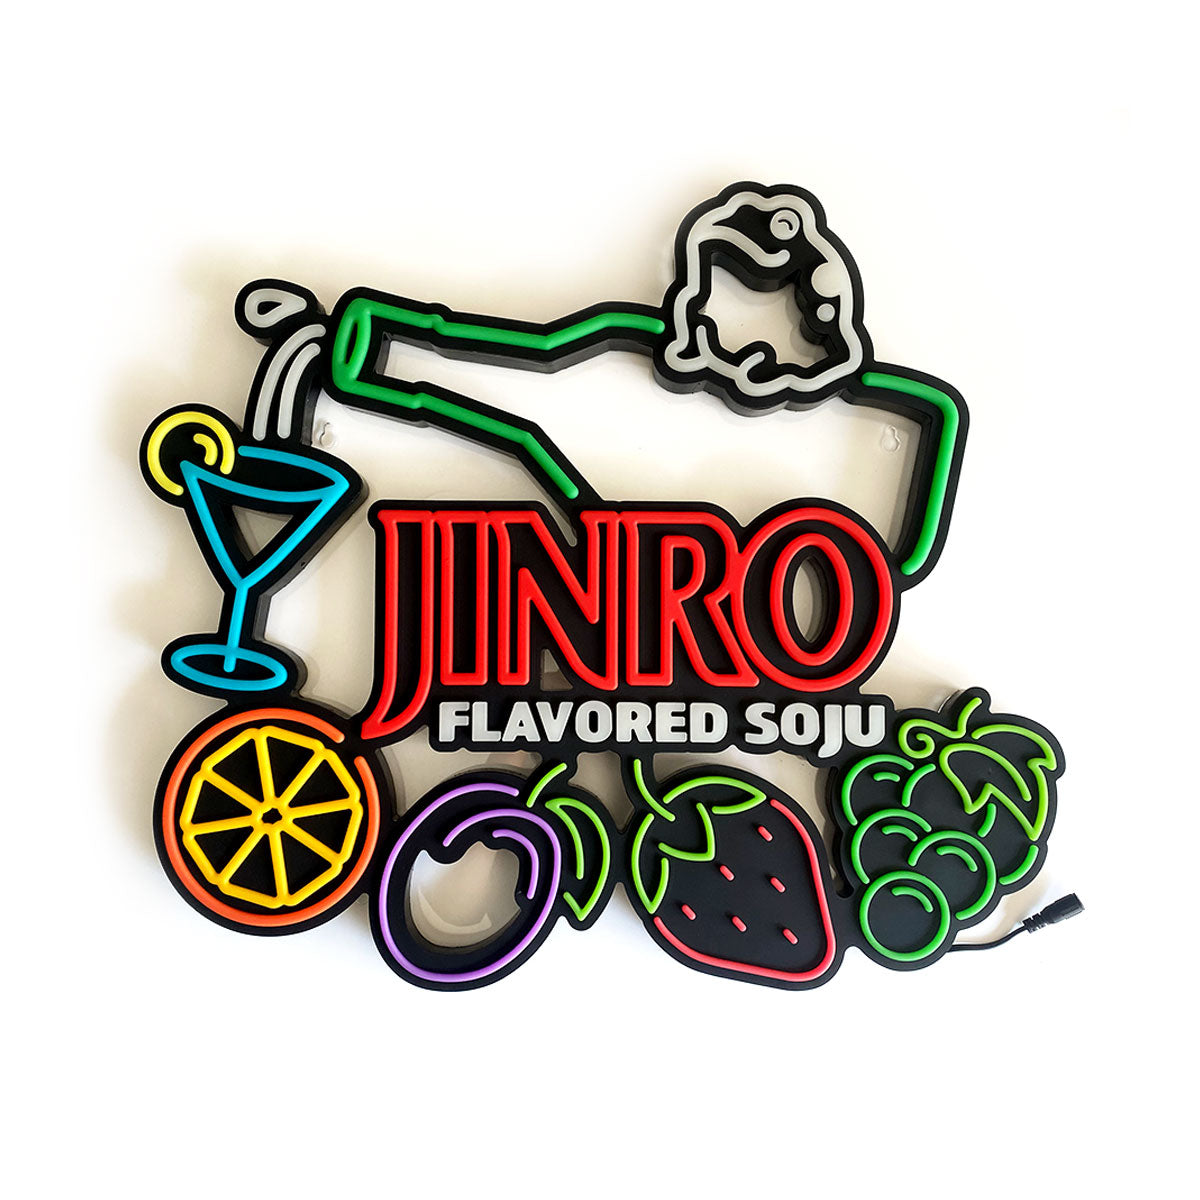 Jinro Flavored Soju Neon Sign